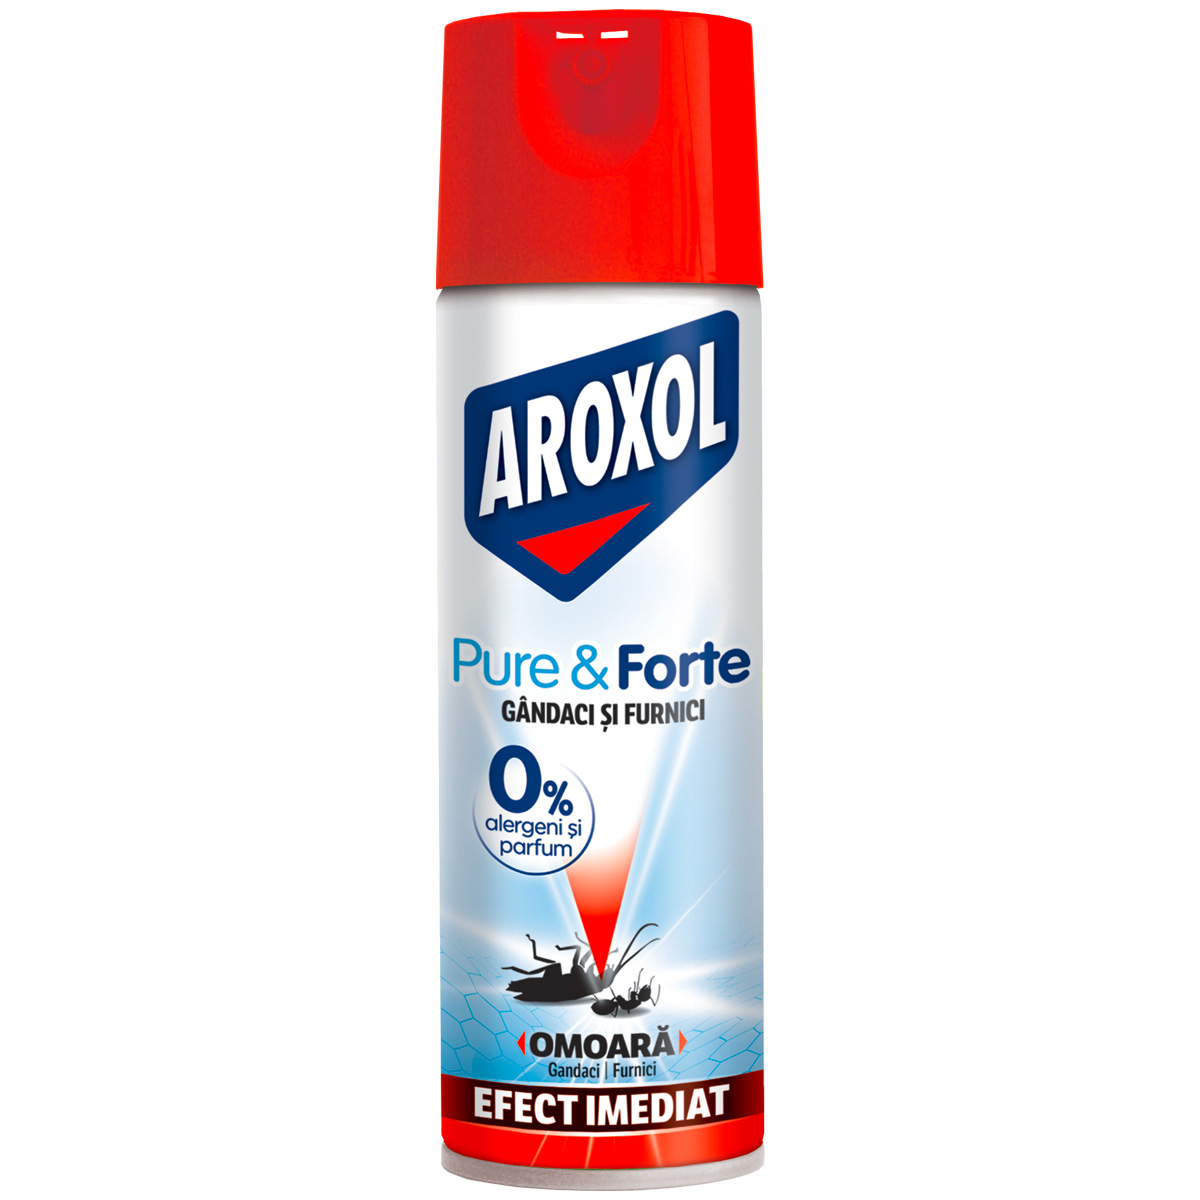 Spray Pure&Forte gandaci Aroxol, efect imediat, 300 ml 300